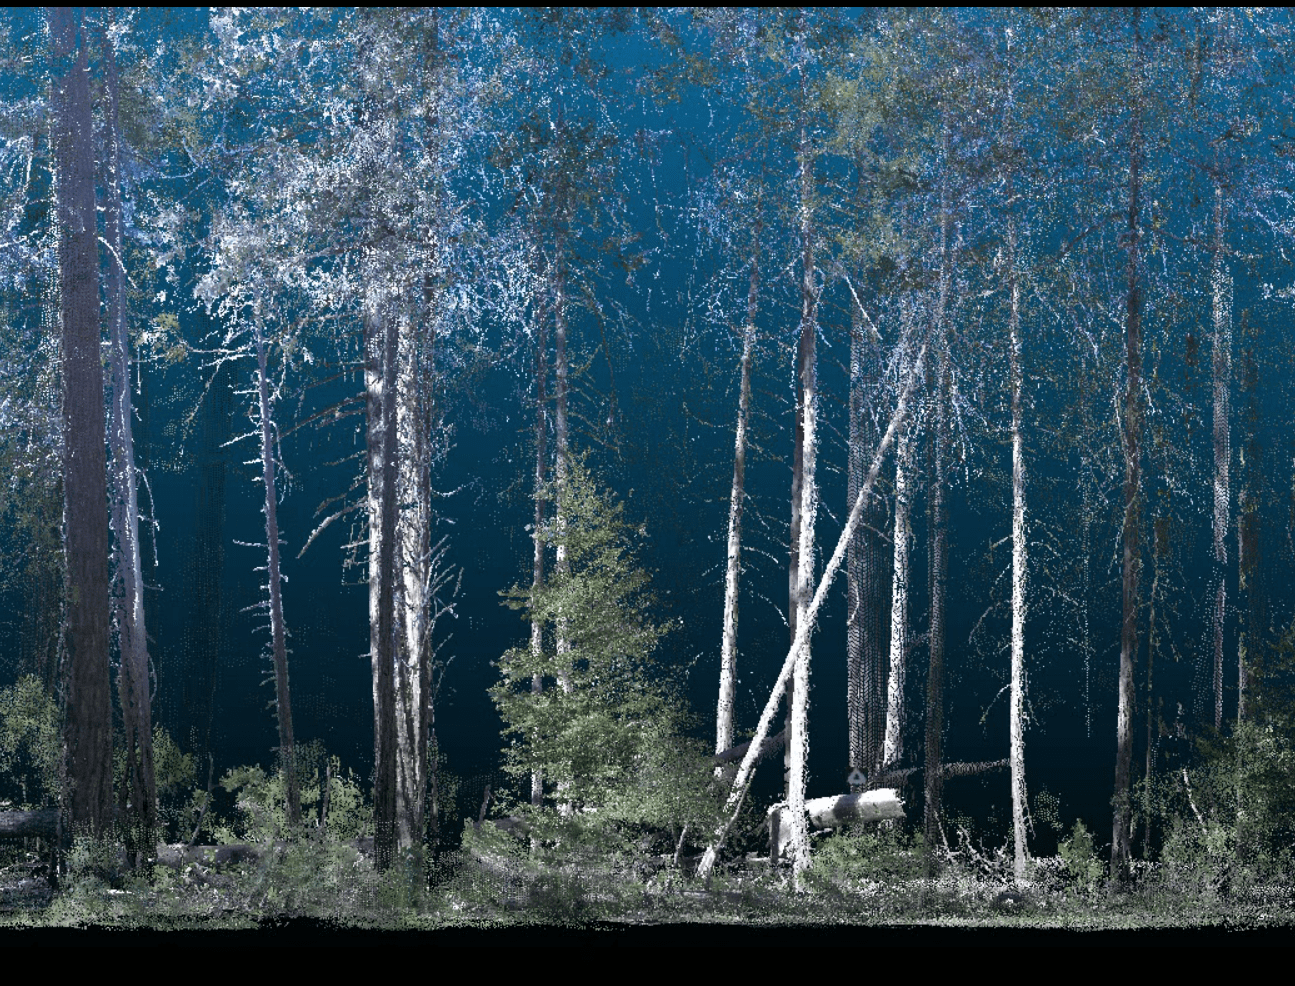 Terrestrial lidar example of forests in Yosemite